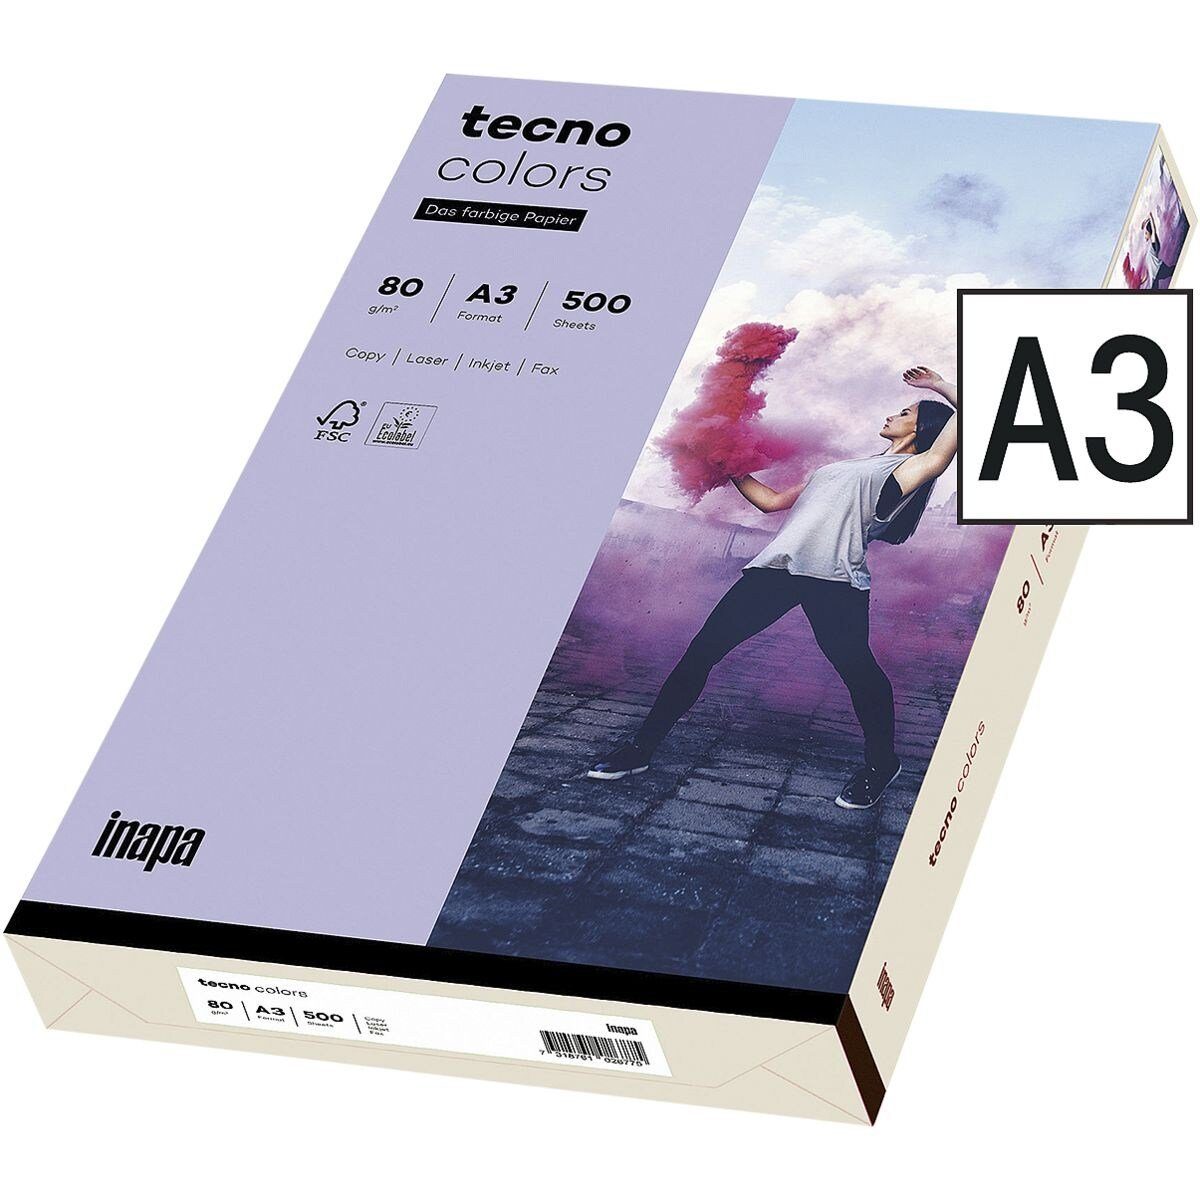 Inapa tecno Drucker- und Kopierpapier Rainbow / tecno Colors, Pastellfarben, Format DIN A3, 80 g/m², 500 Blatt violett